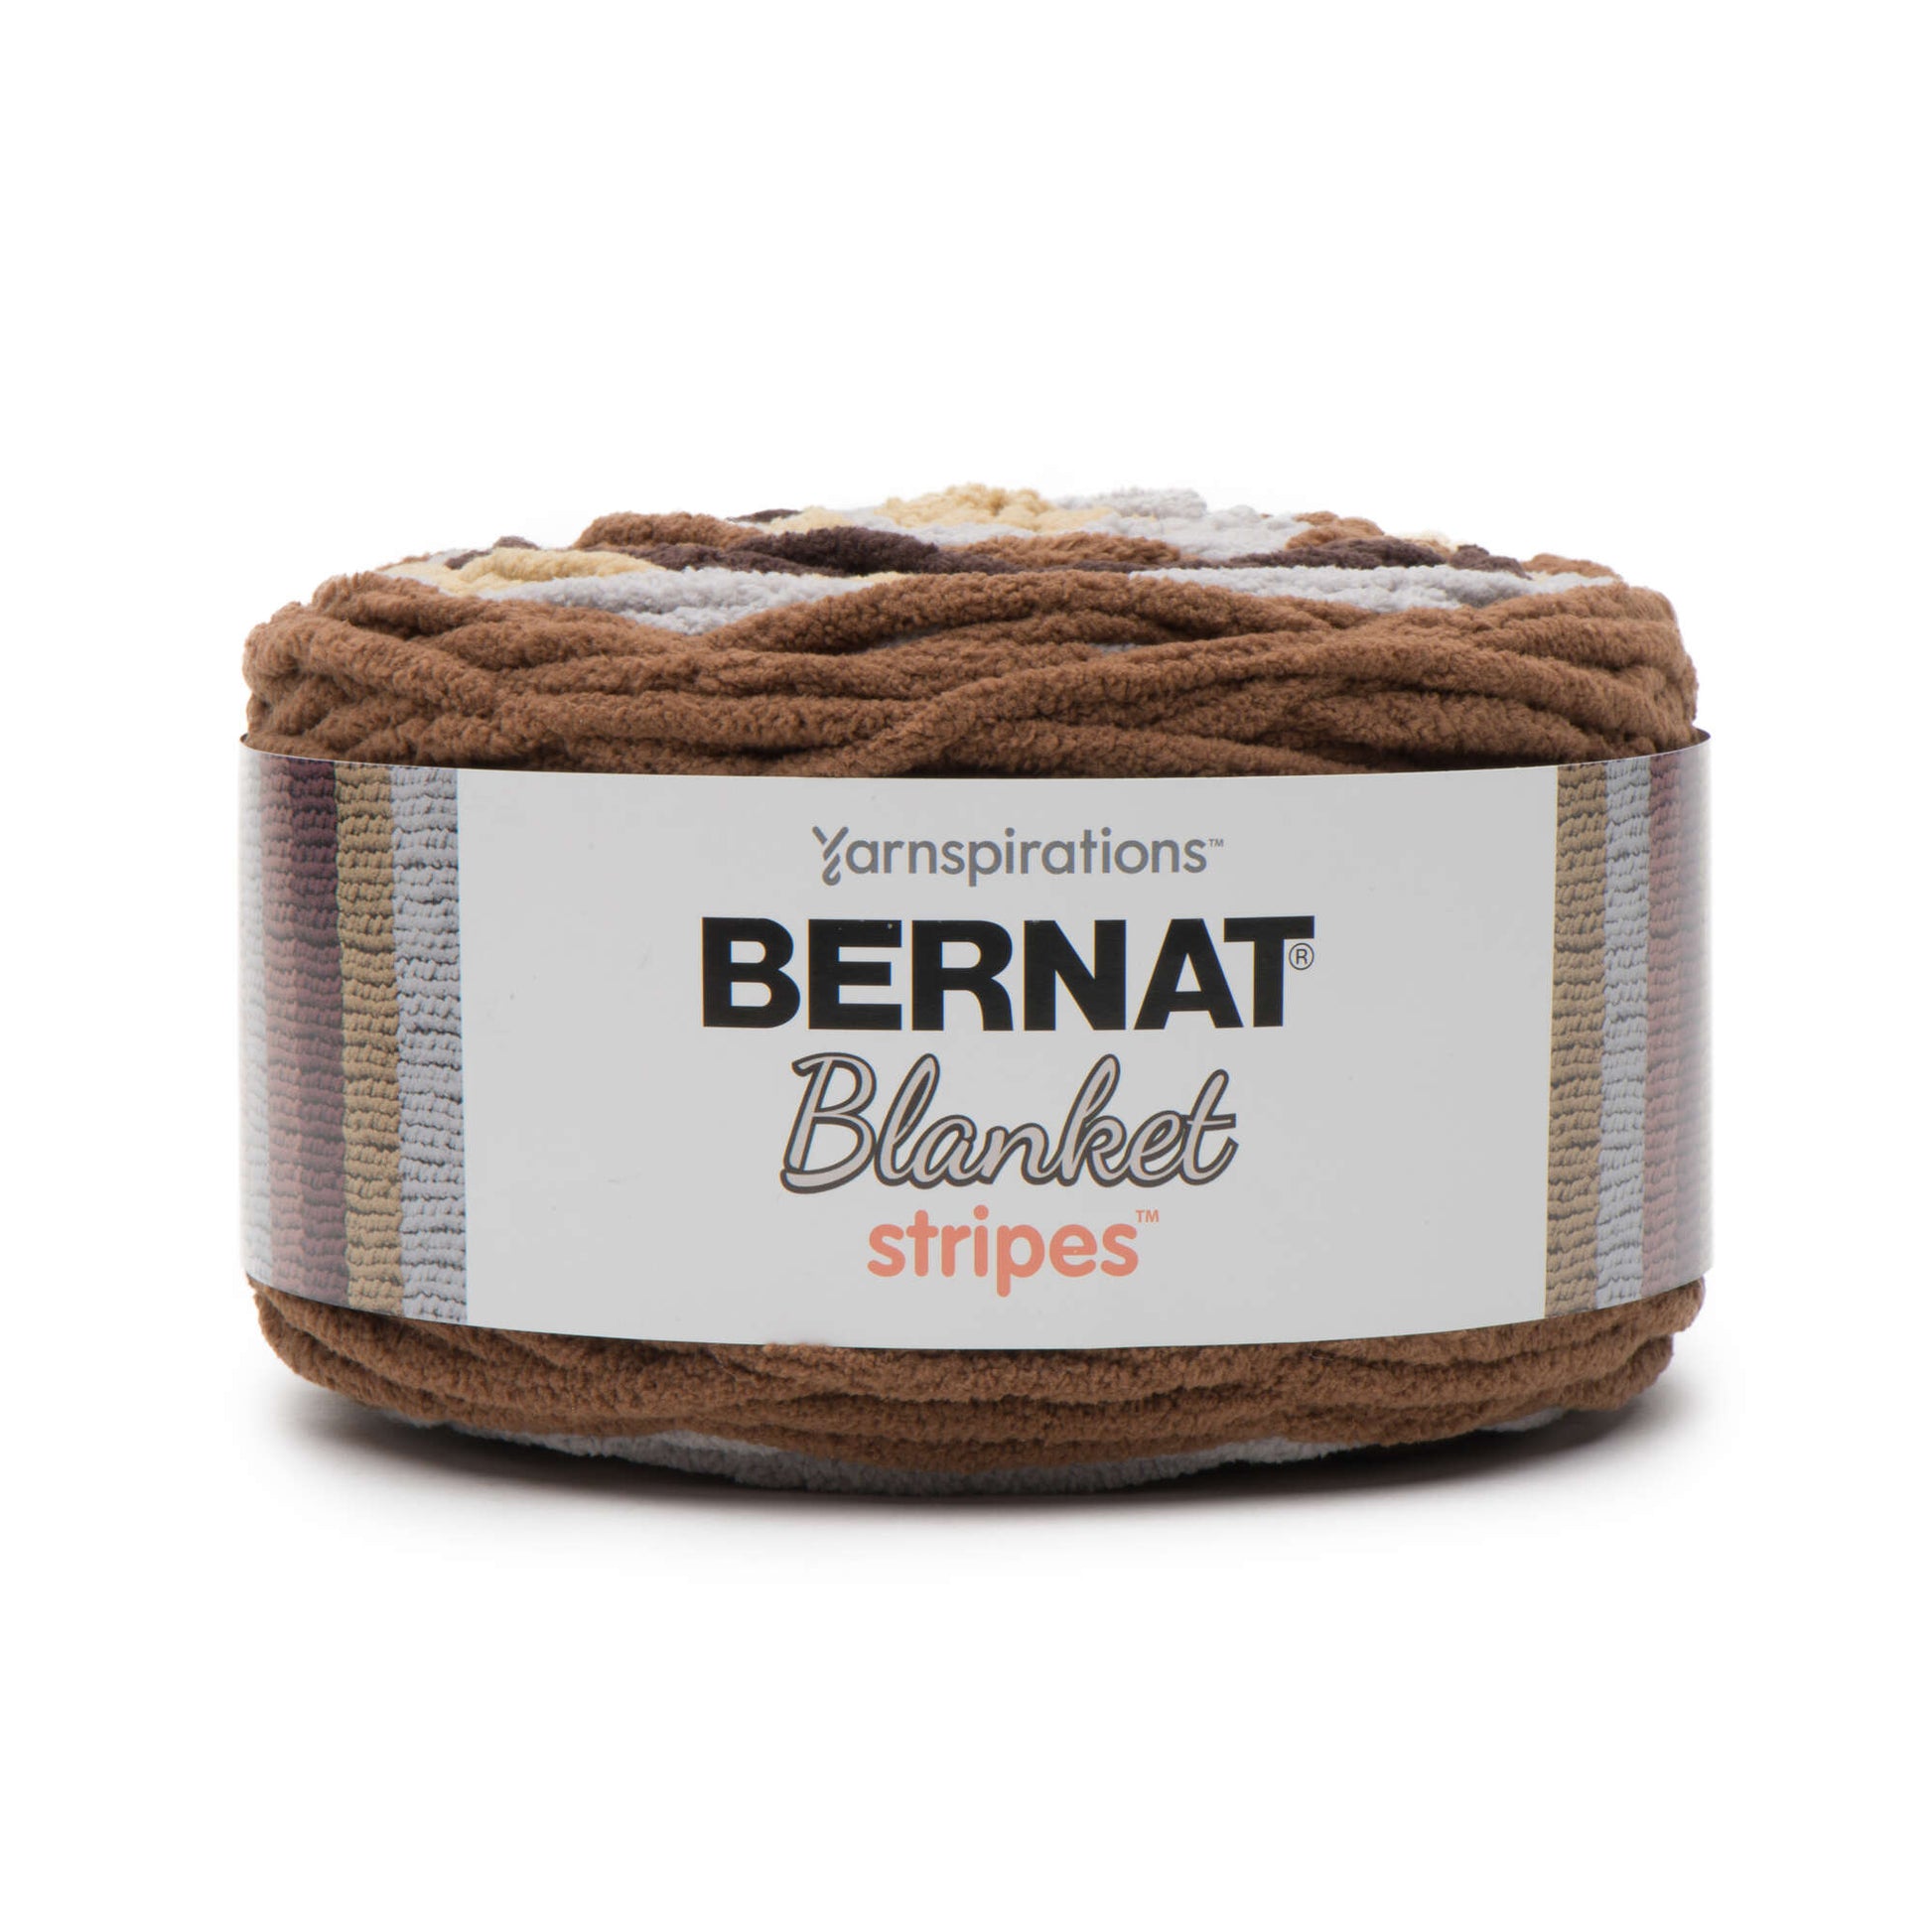 Bernat Blanket Stripes Yarn (300g/10.5oz) - Discontinued Shades Sand Dunes